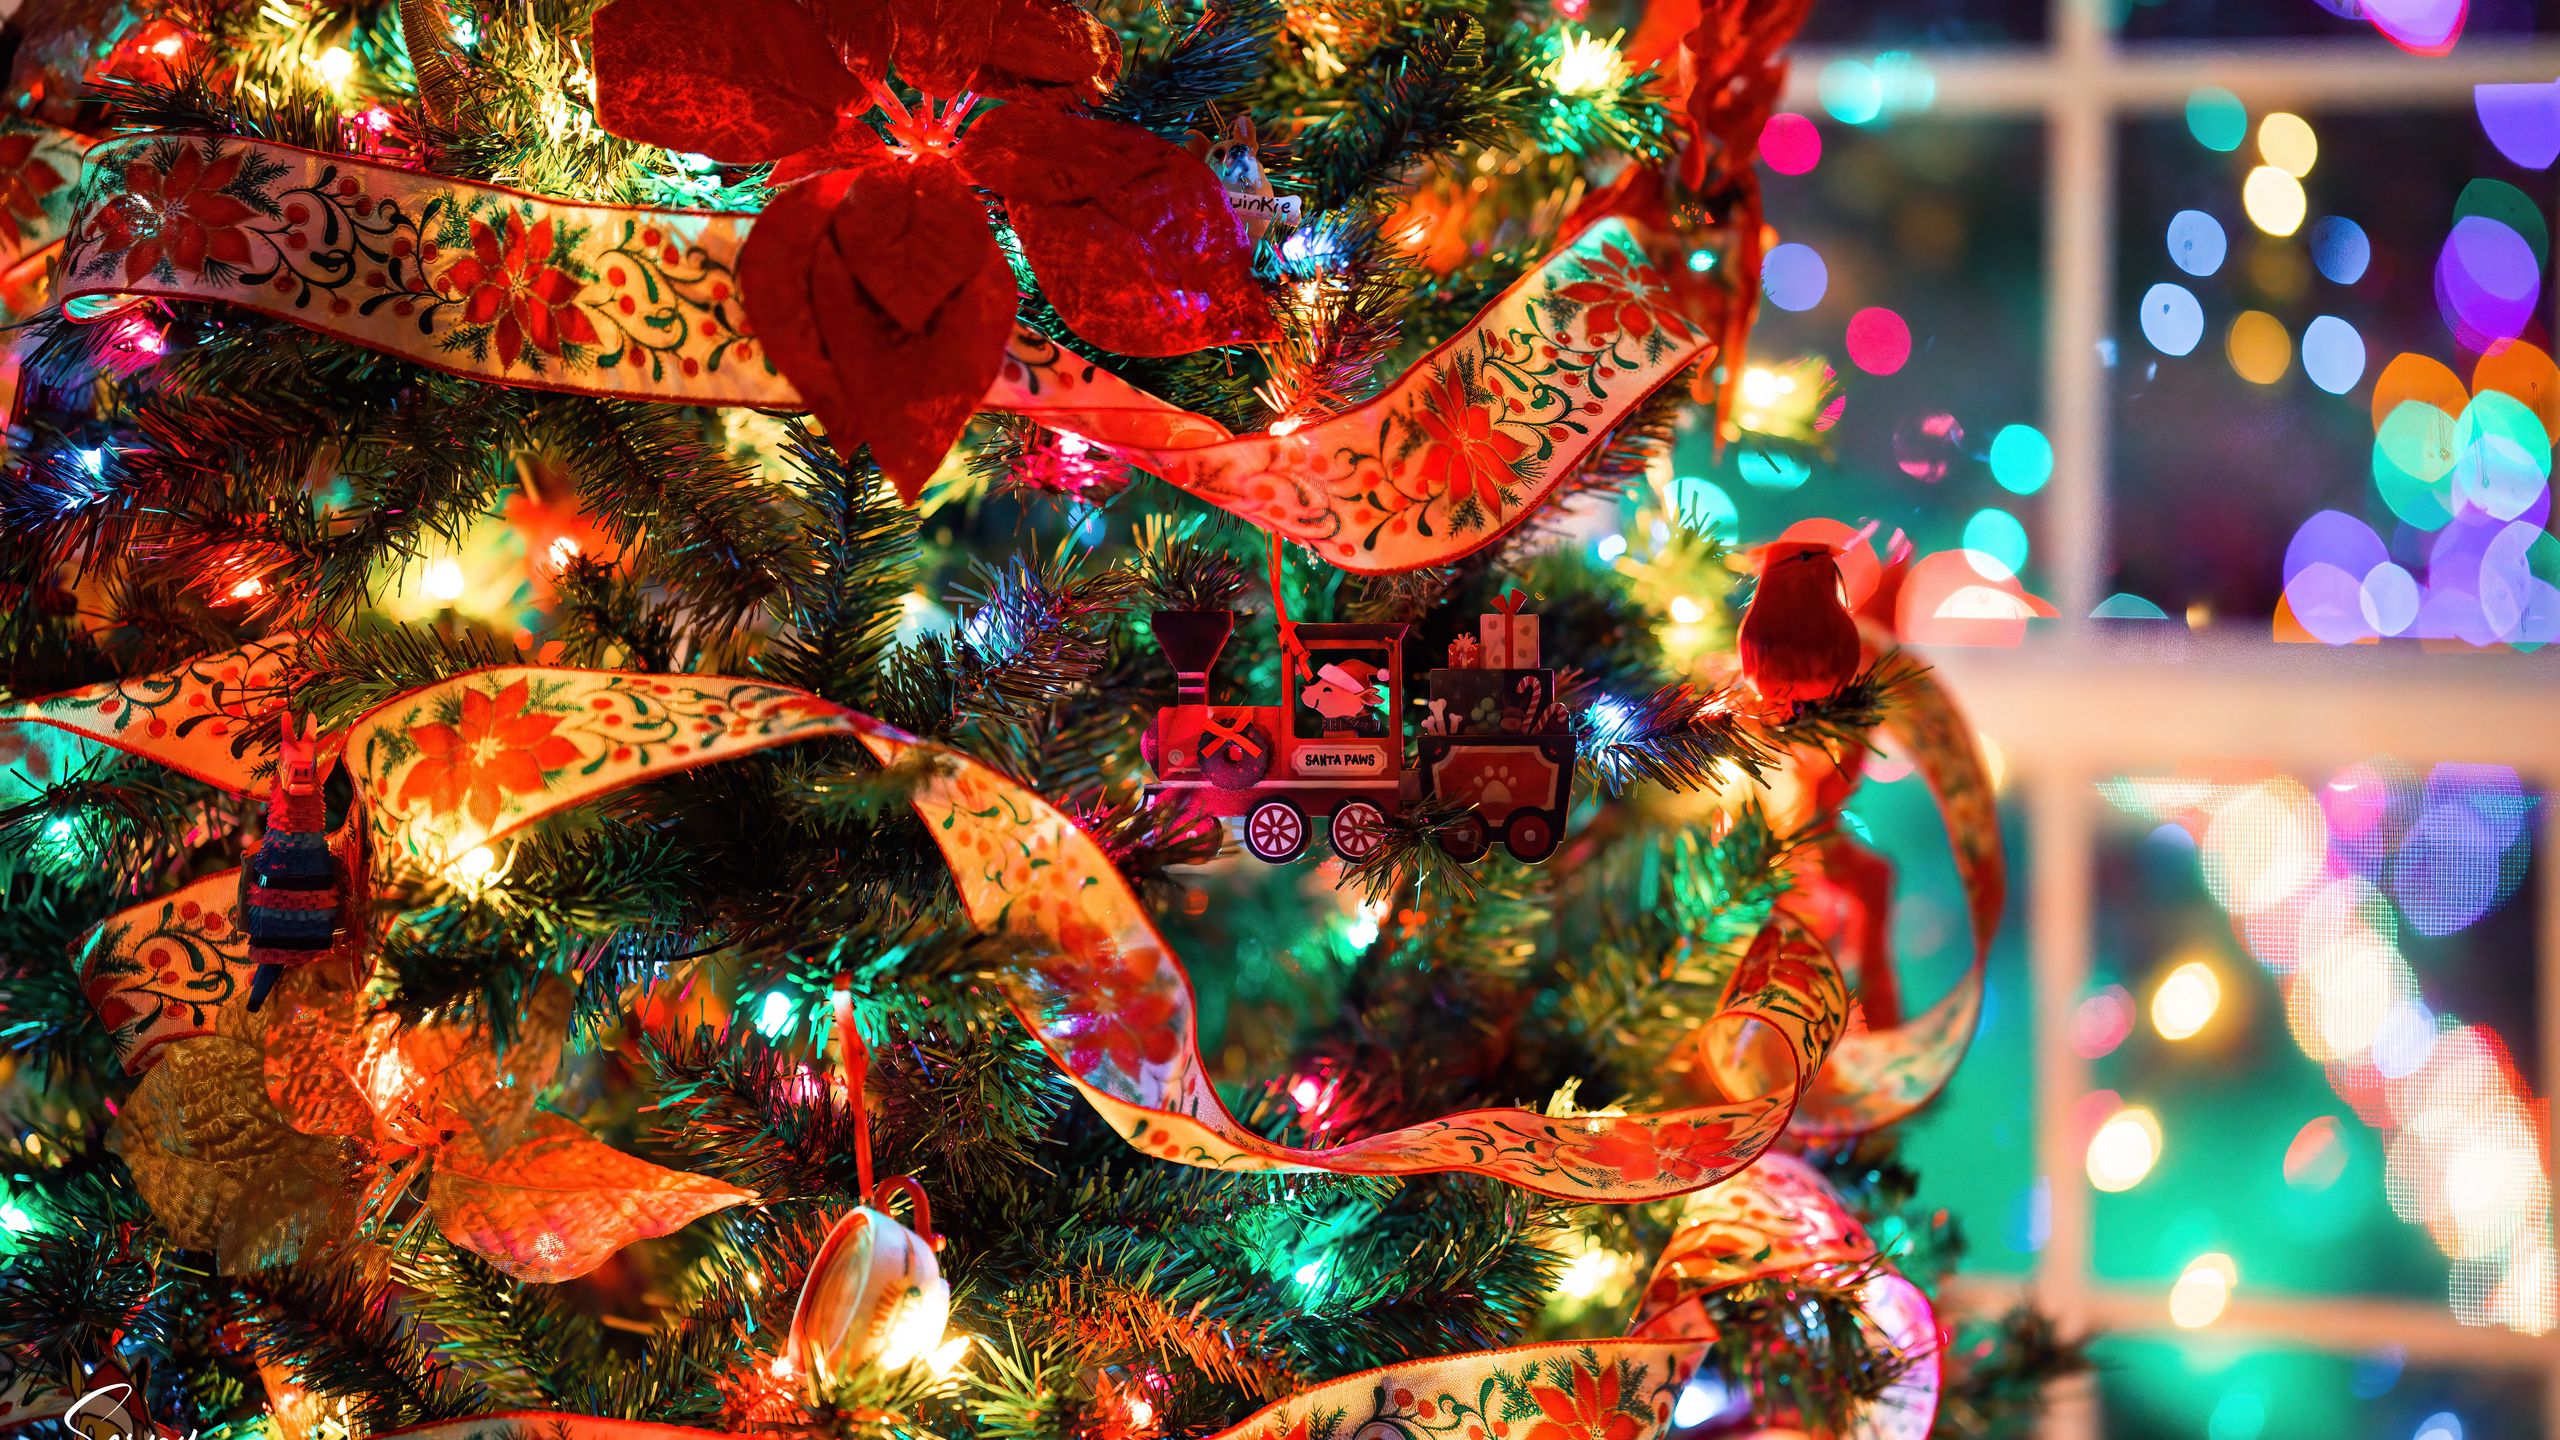 Download wallpaper 2560x1440 christmas tree, decorations, garlands ...